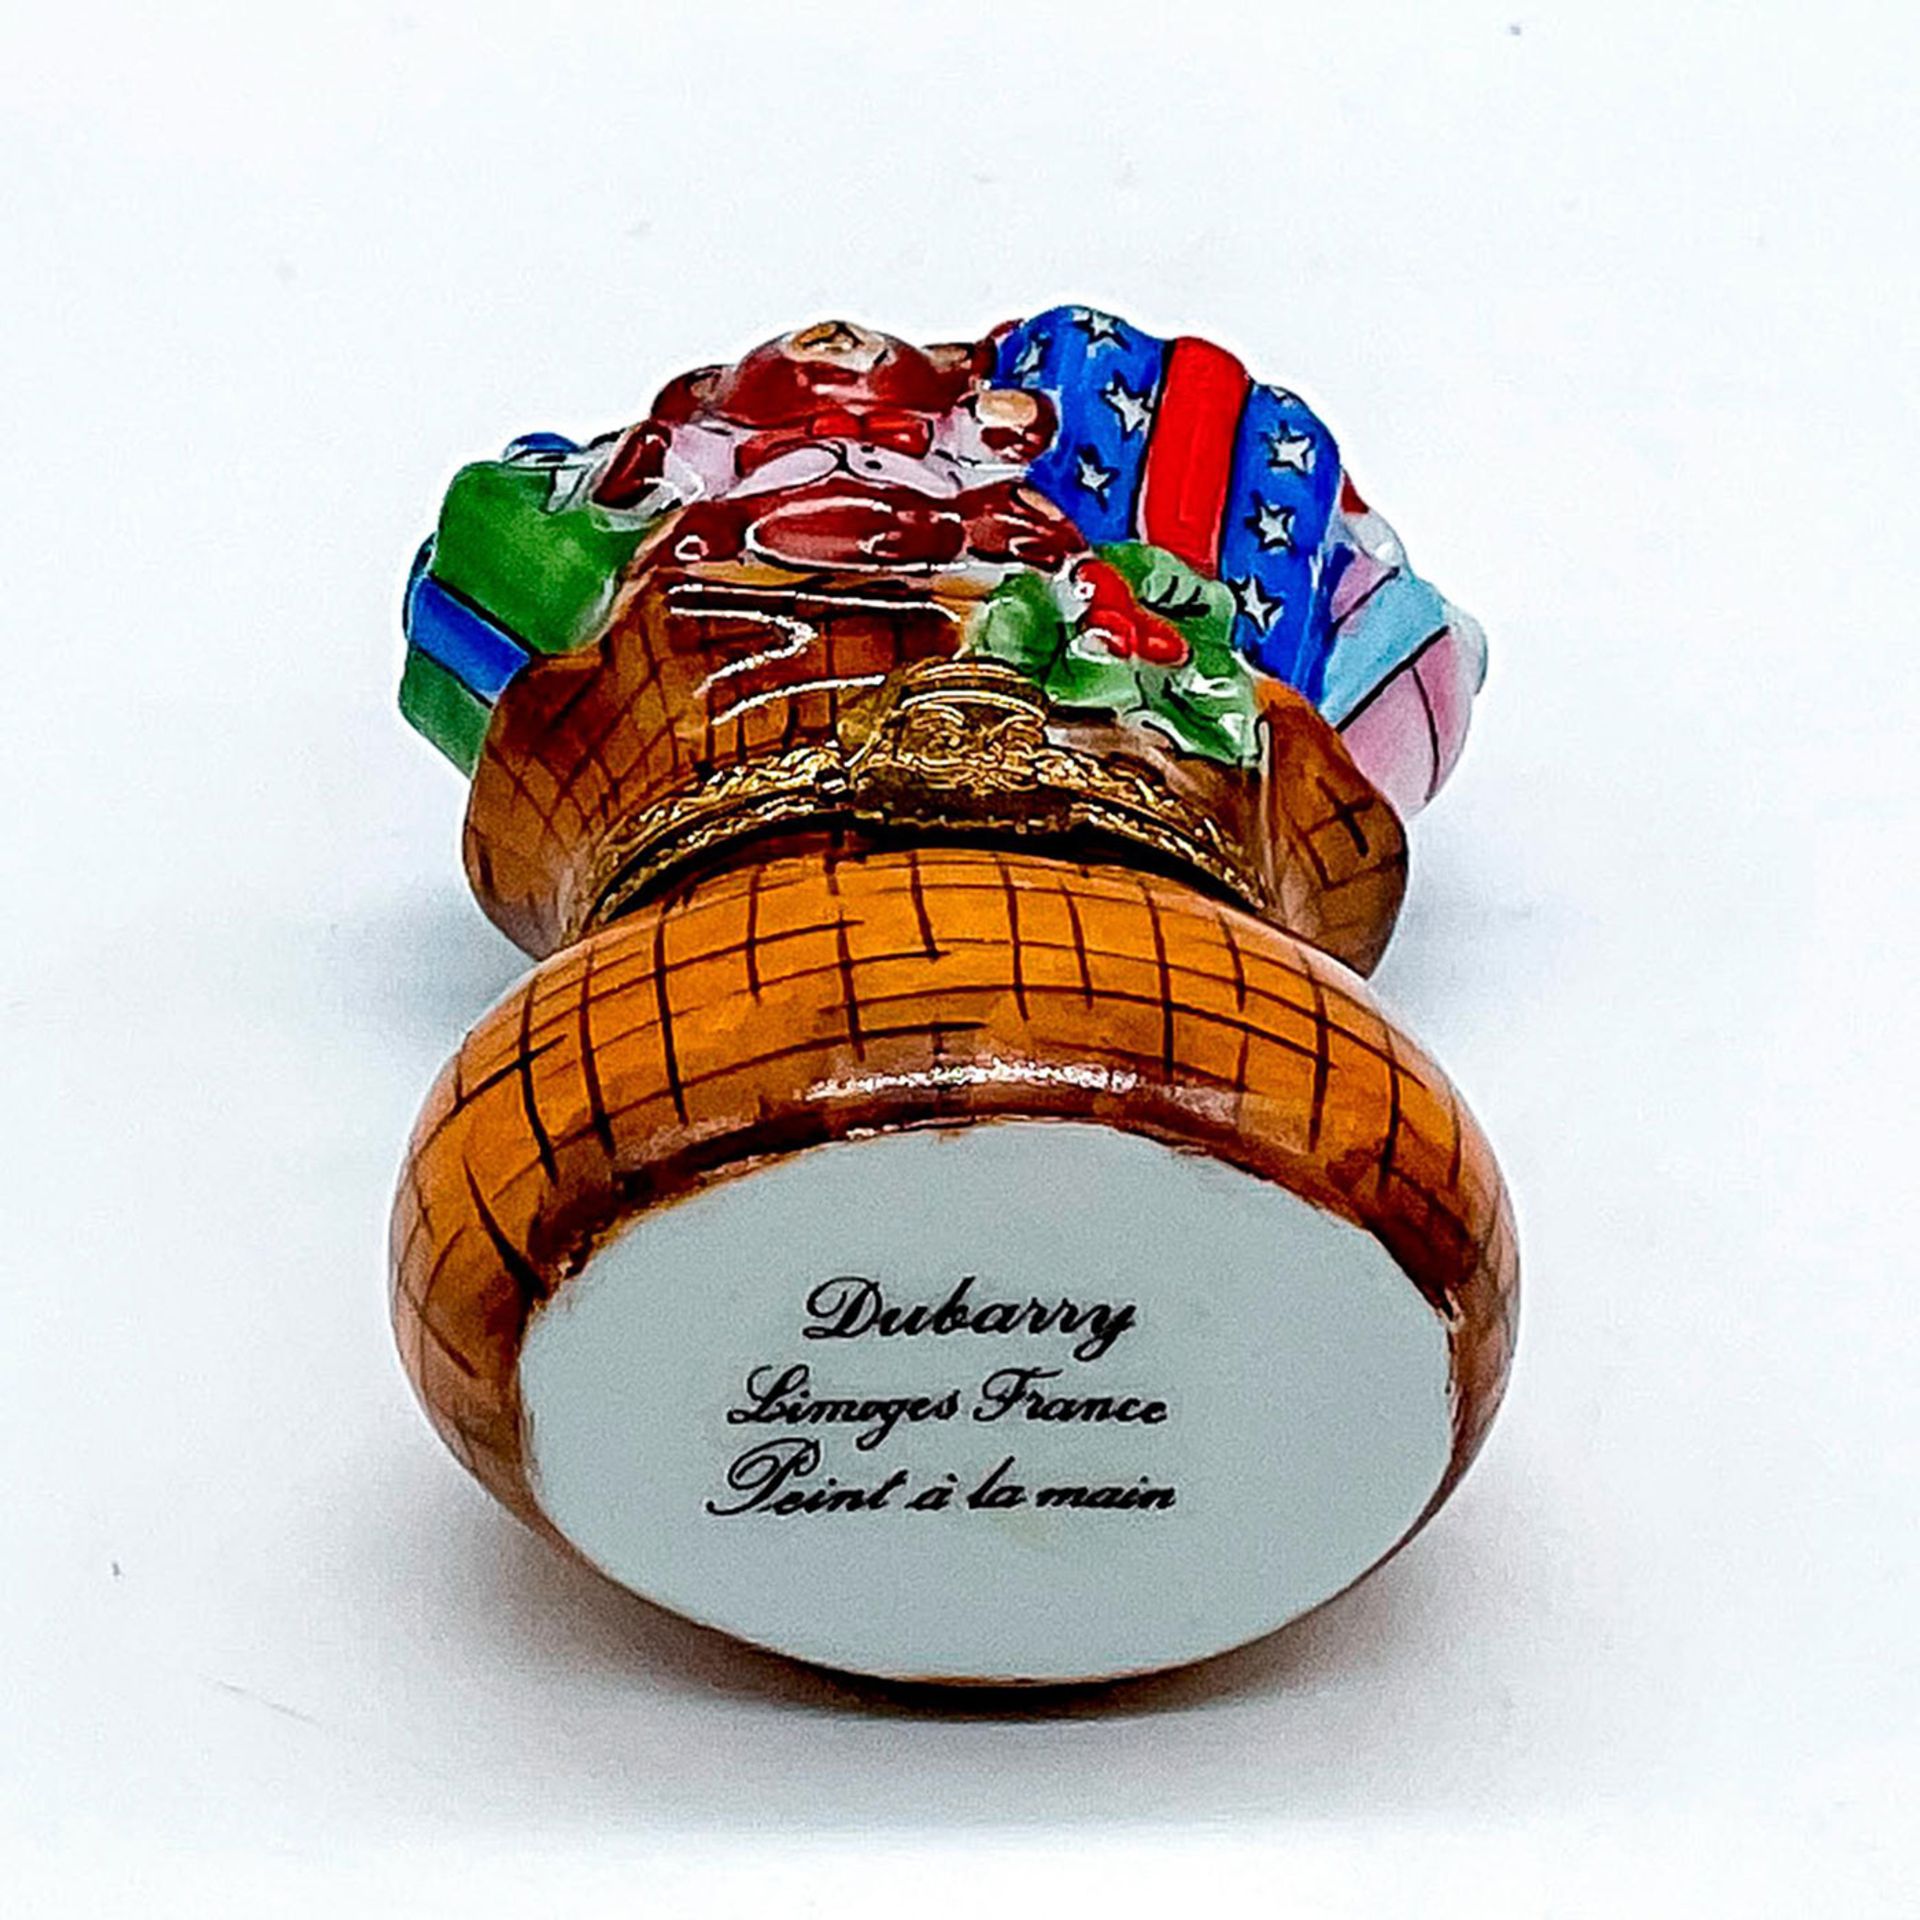 Dubarry Limoges Porcelain Charm Box, Basket of Gifts - Image 3 of 4